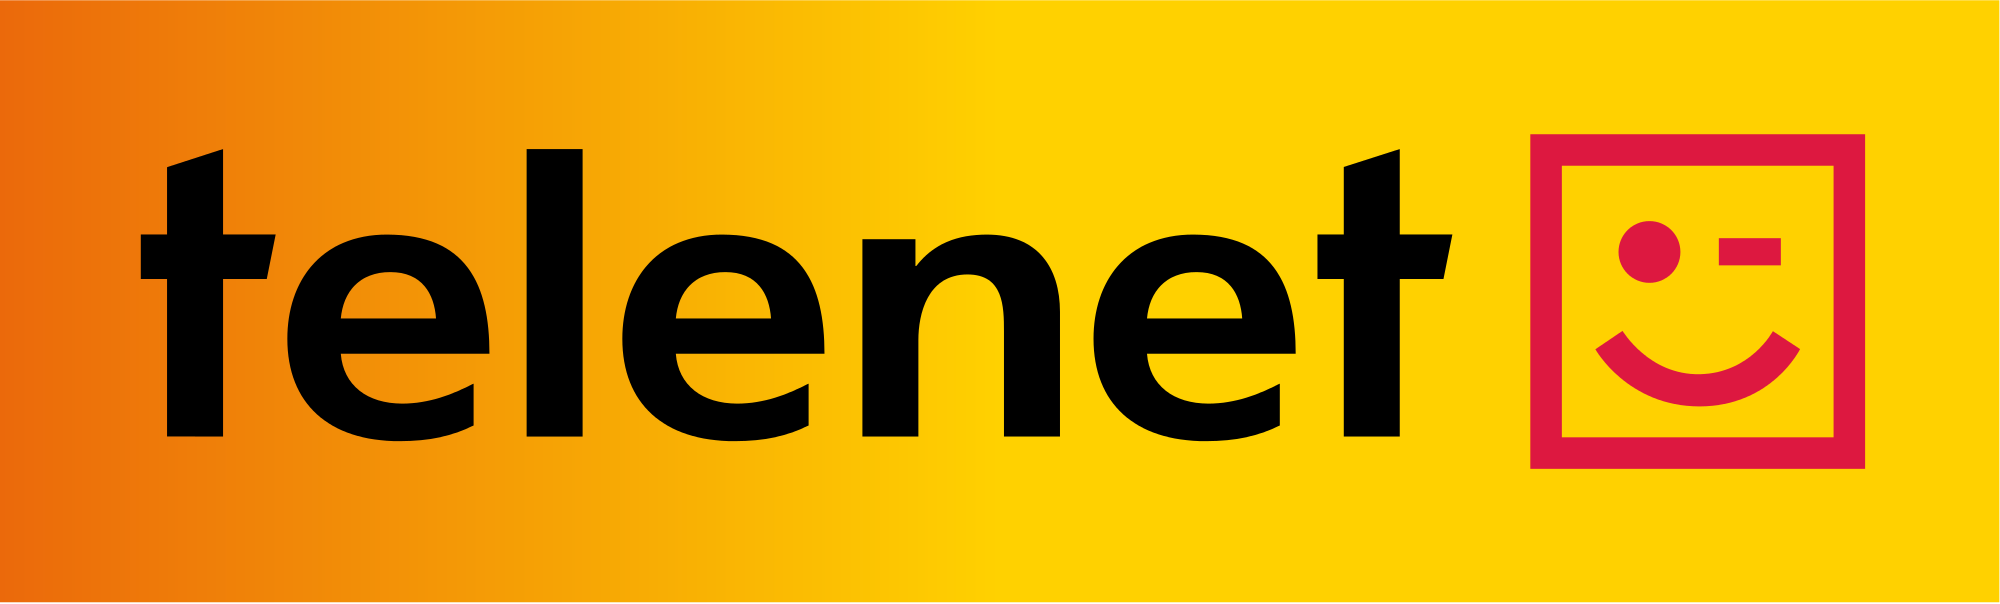 Telestrada Logo photo - 1